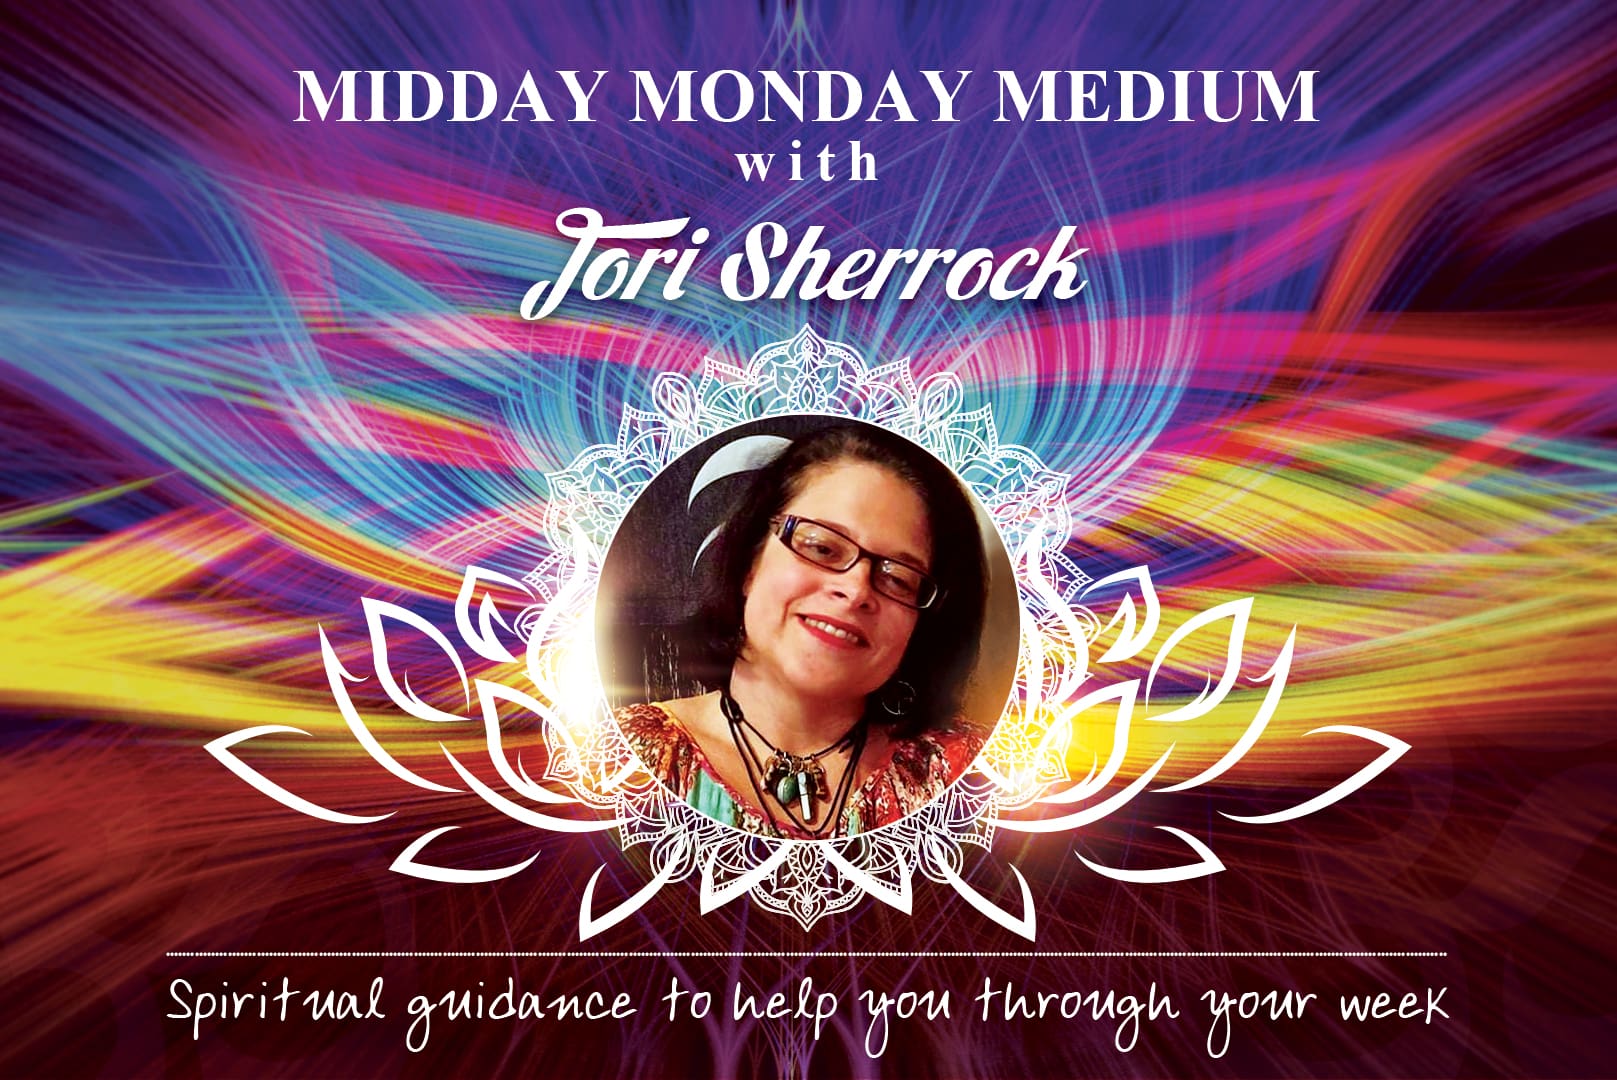 Midday Monday Medium with Tori Sherrock